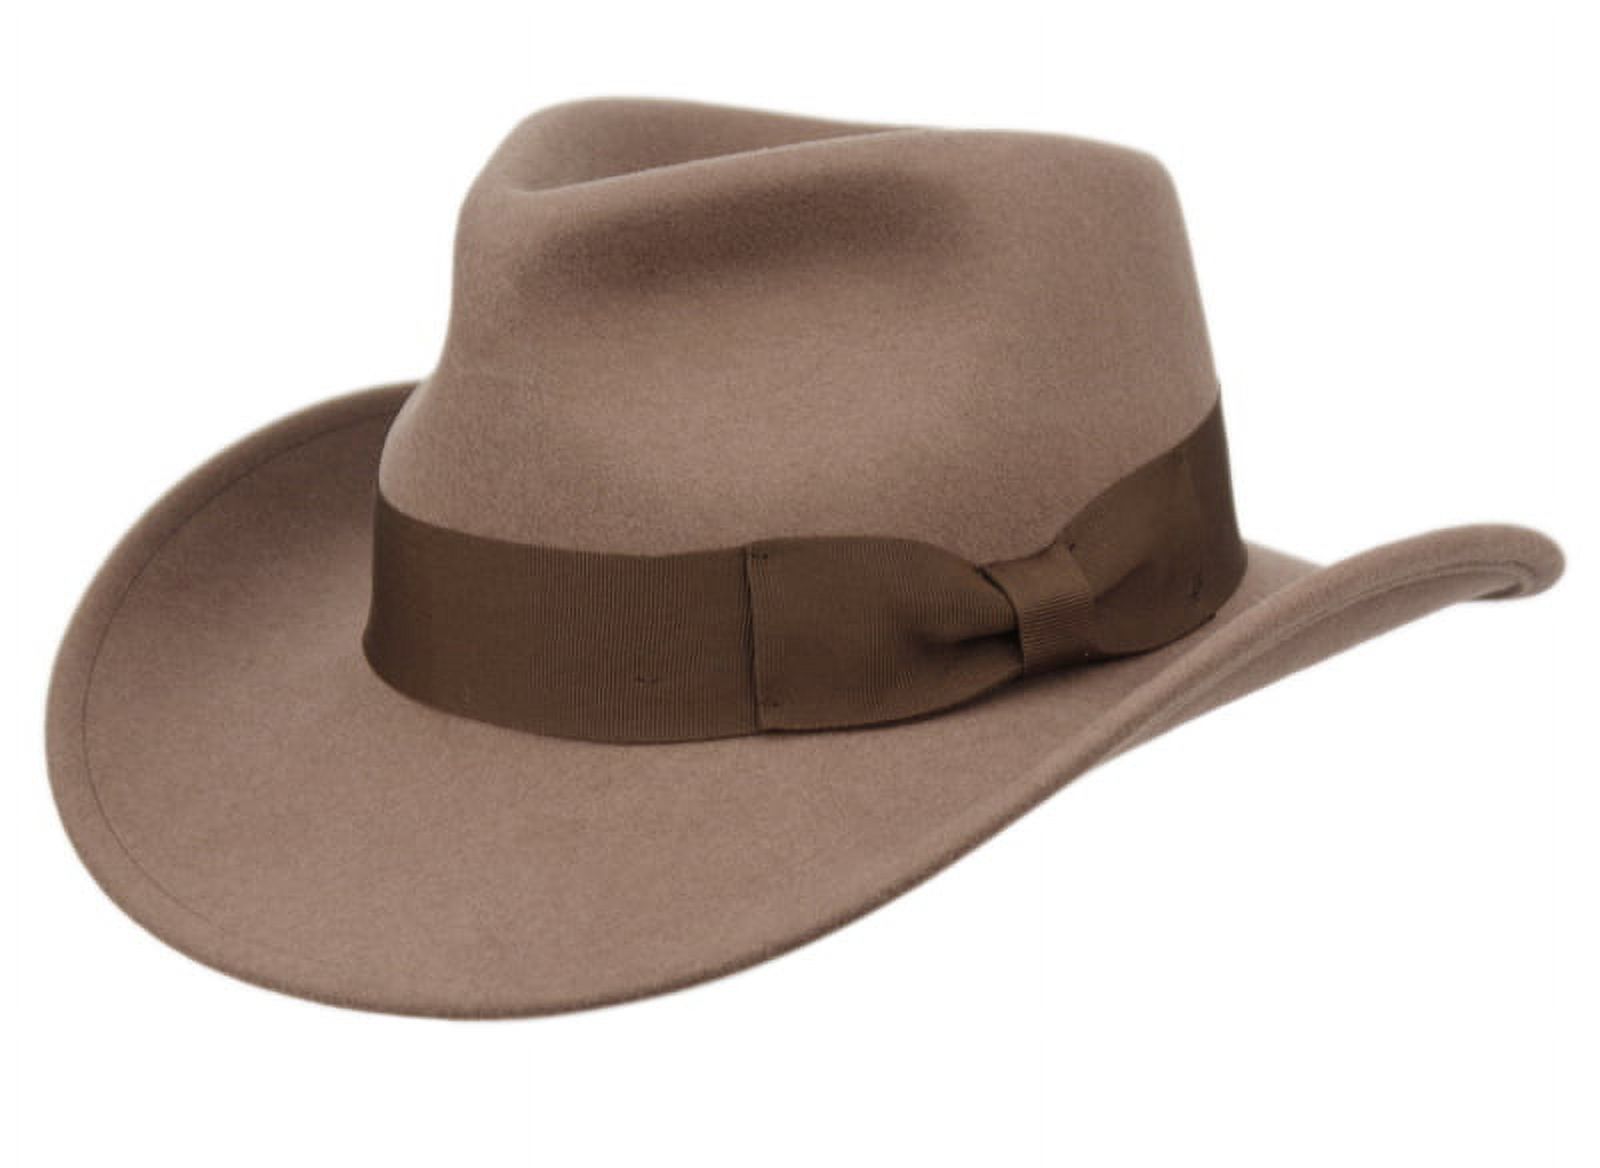 Premium Wool Felt Indiana Jones Crushable Fedora Hat w/Grosgrain Band Cowboy Hat - image 1 of 1